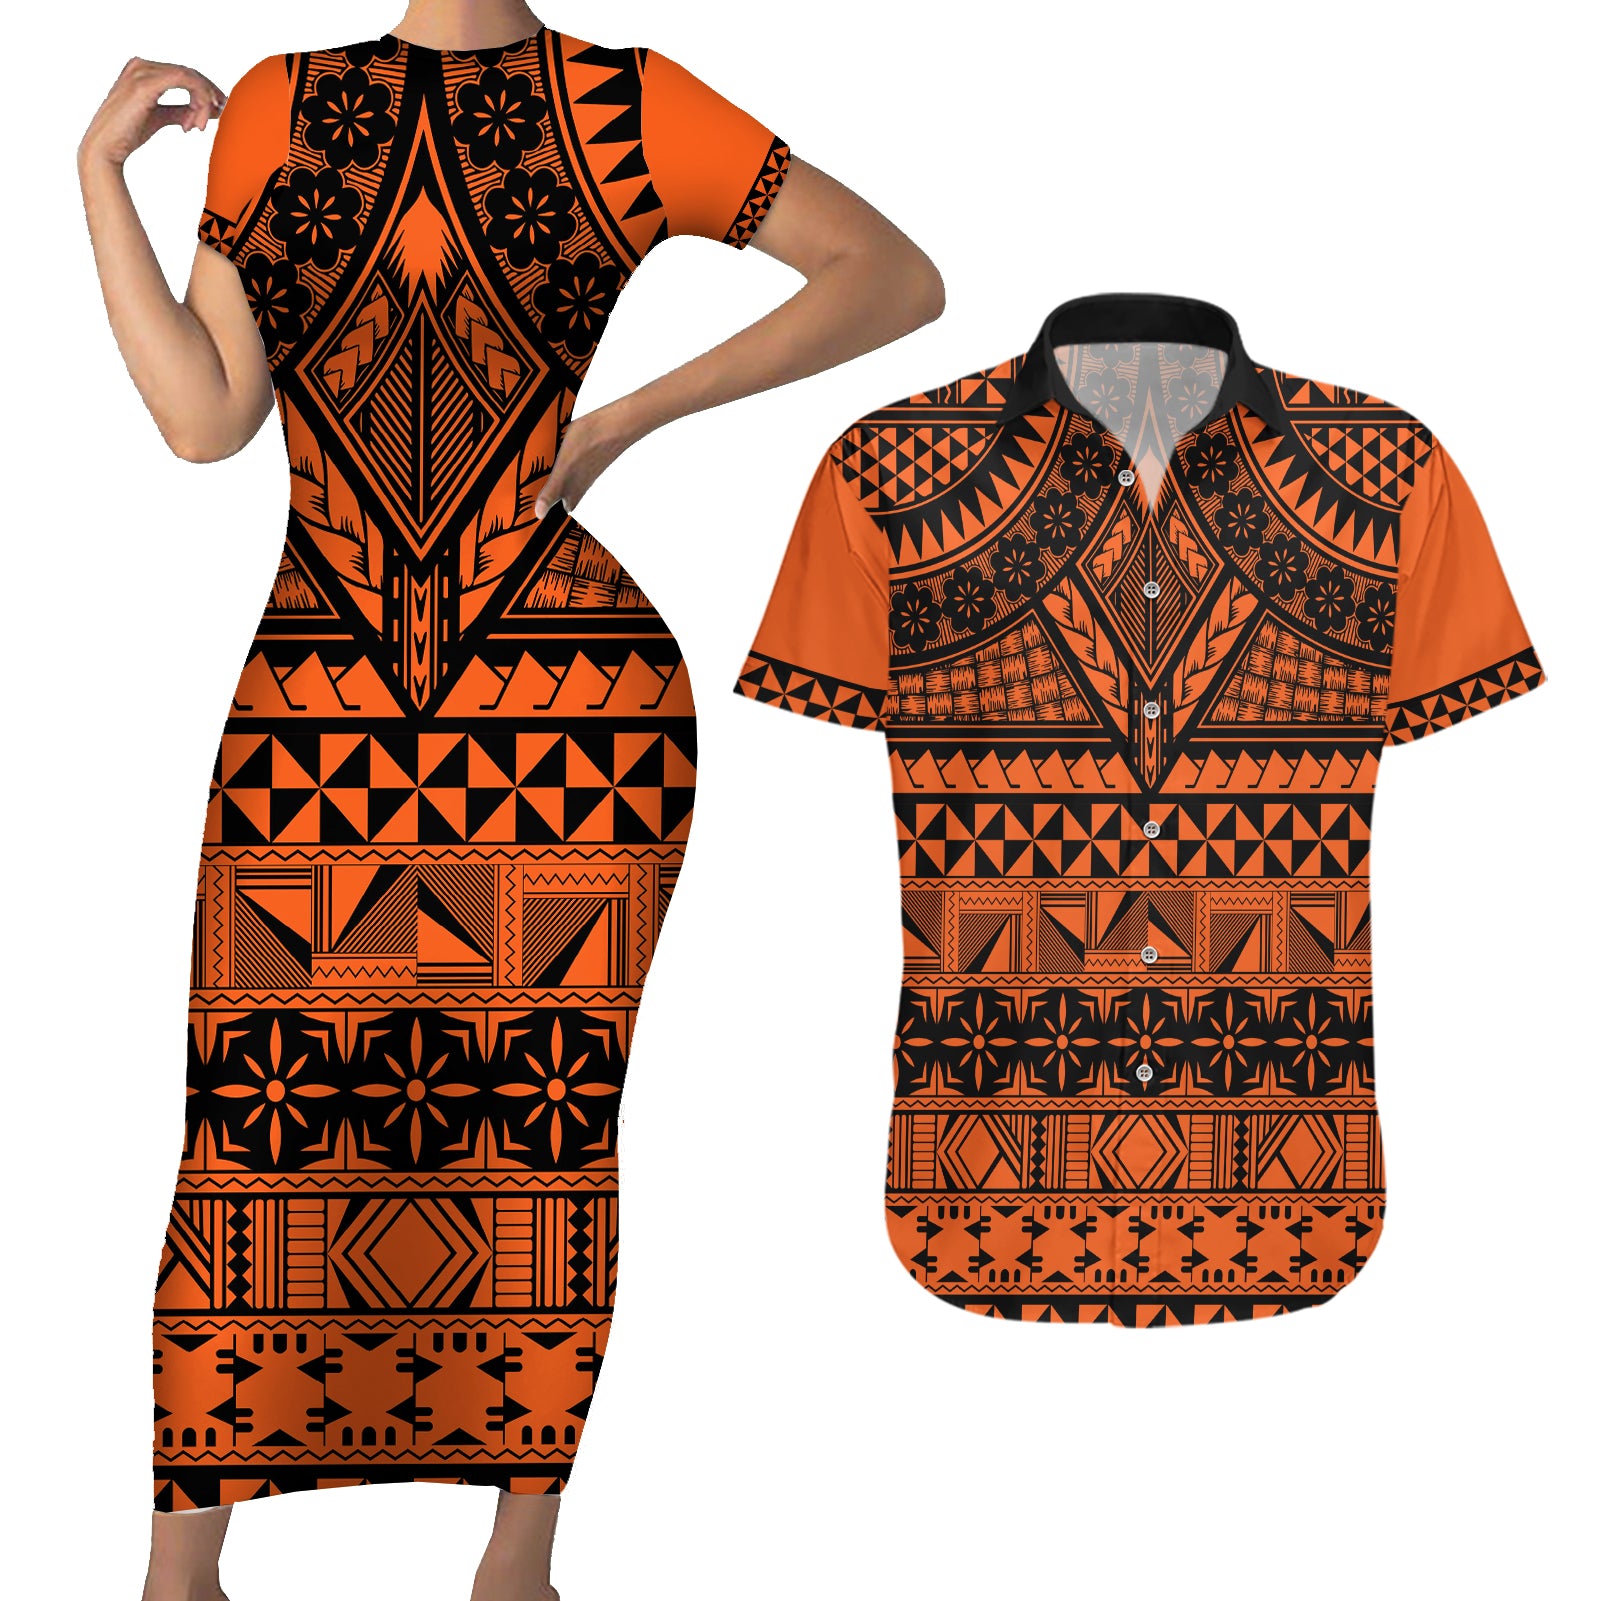 Halo Olaketa Solomon Islands Couples Matching Short Sleeve Bodycon Dress and Hawaiian Shirt Melanesian Tribal Pattern Orange Version LT14 Orange - Polynesian Pride